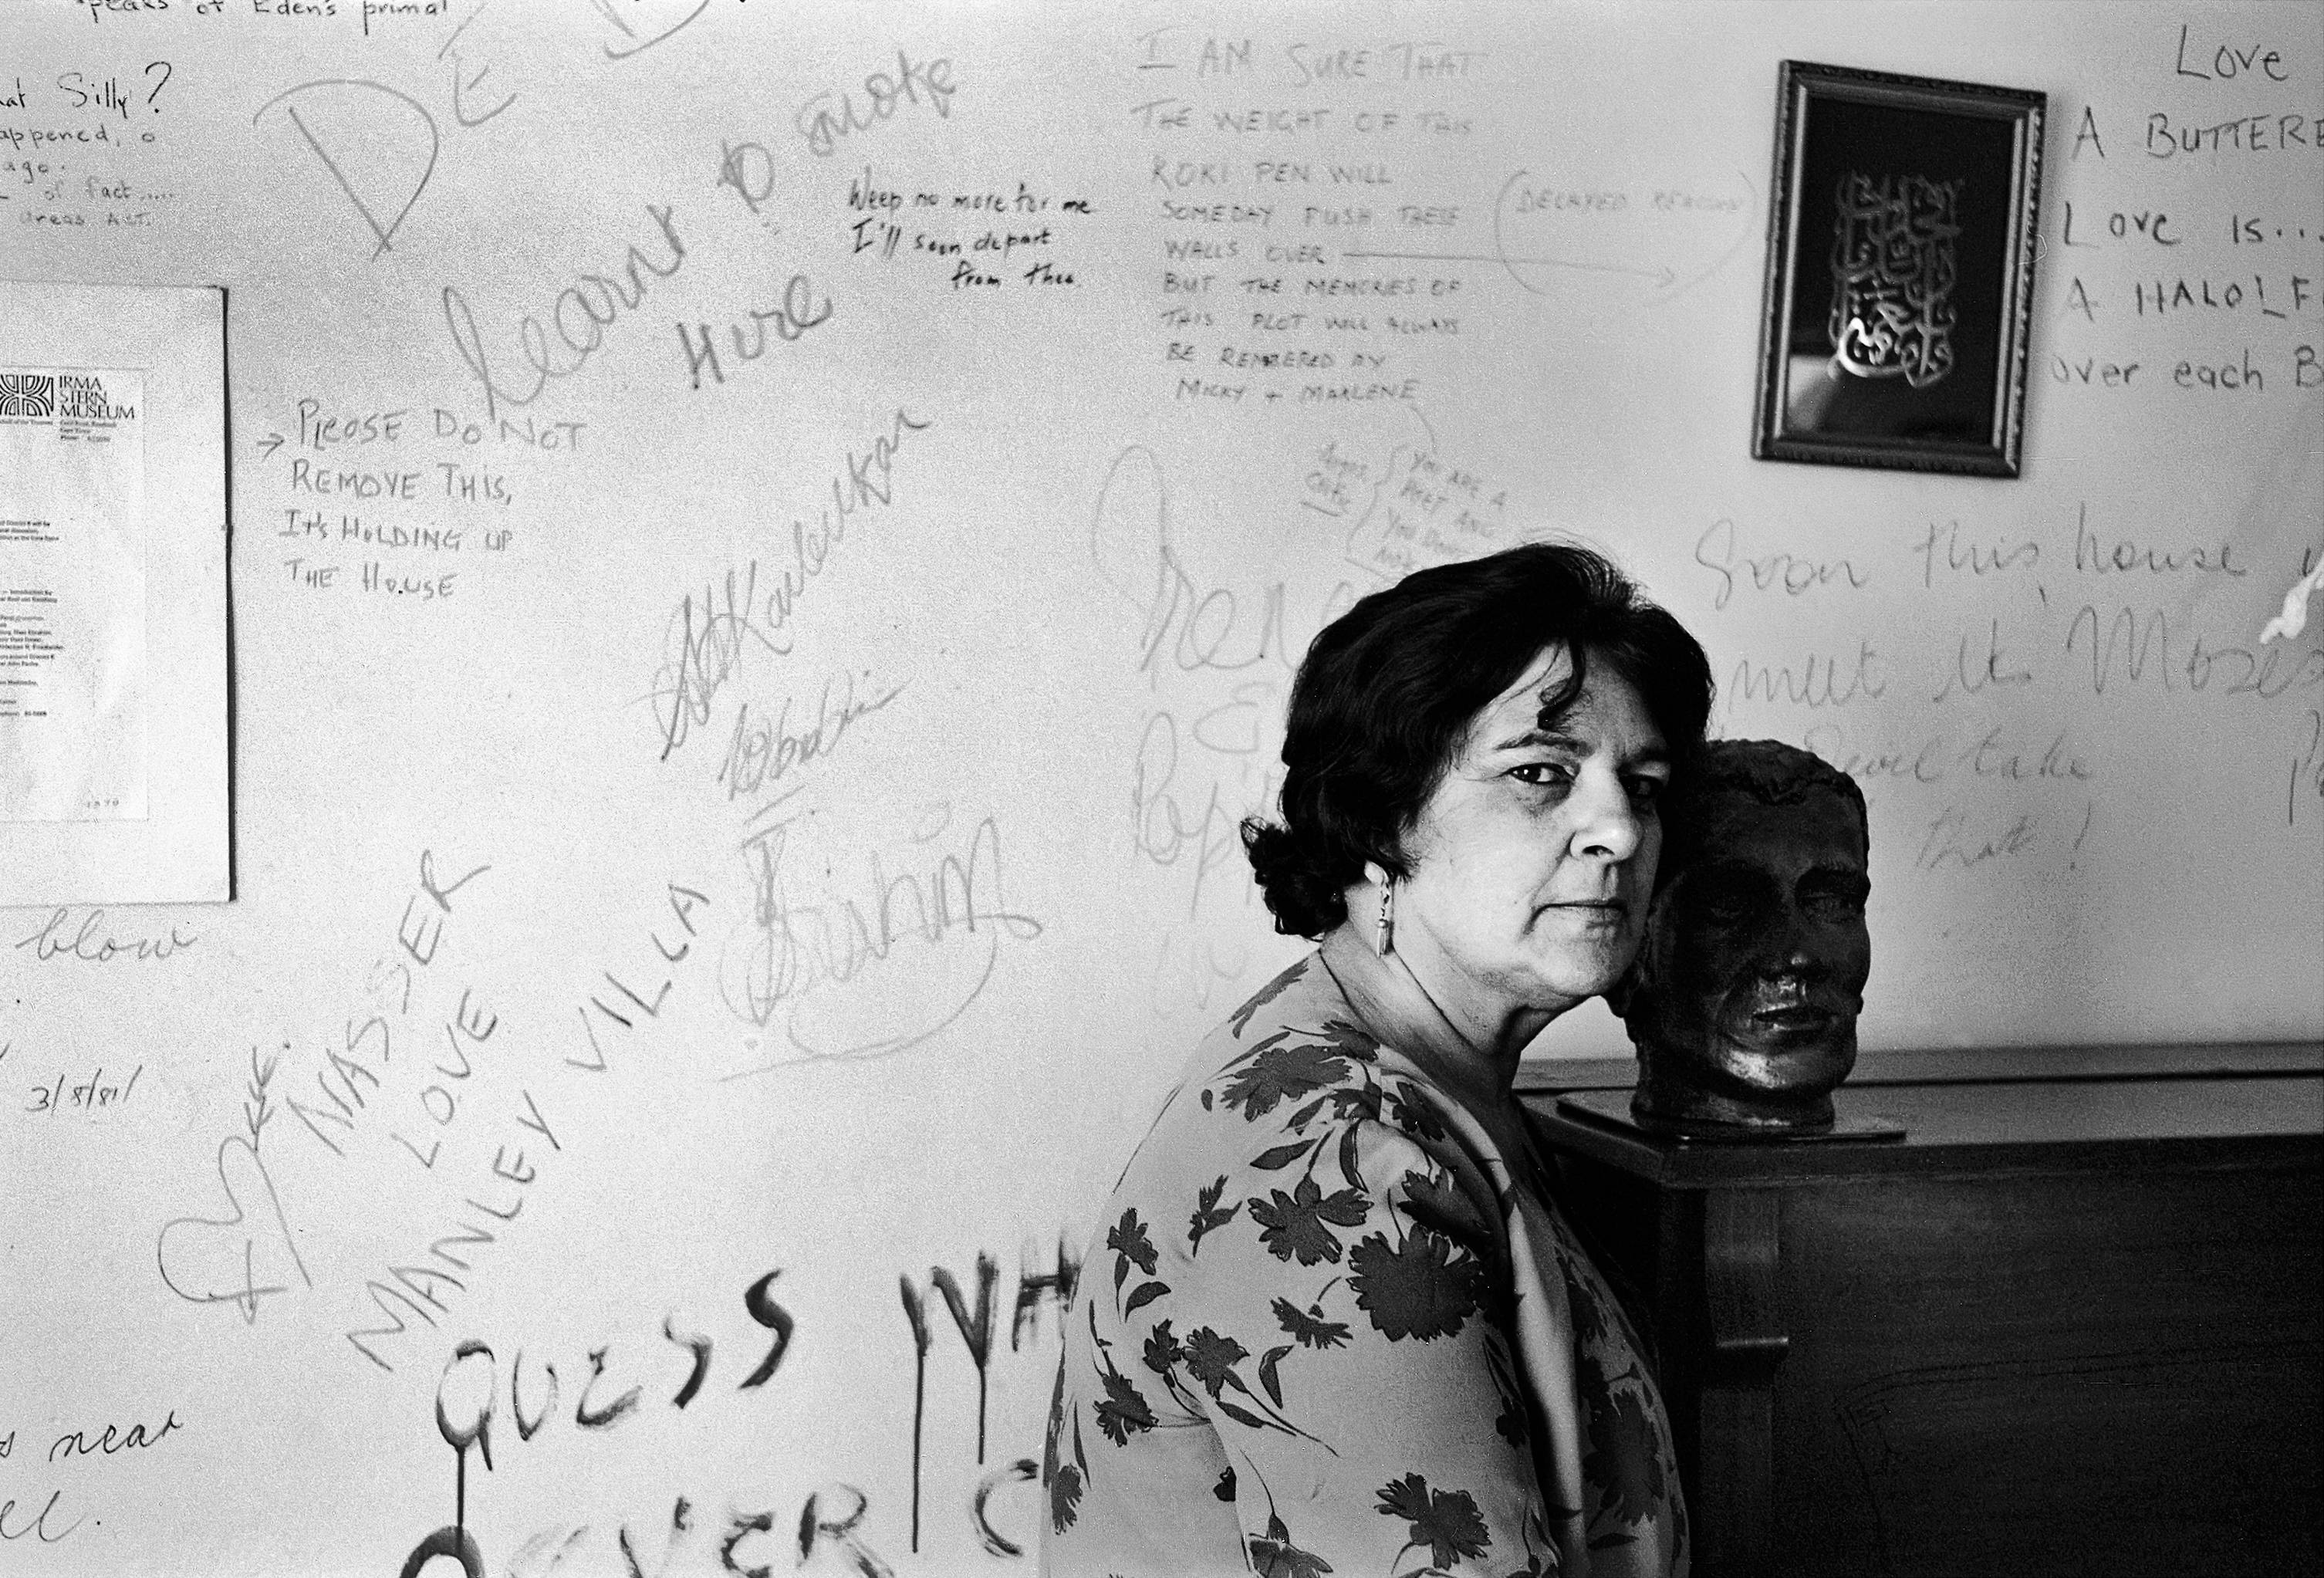  Sue WILLIAMSON, Last Supper at Manley Villa - Naz with wall messages, 1981. Courtesy Sue WILLIAMSON & Galerie Dominique Fiat  